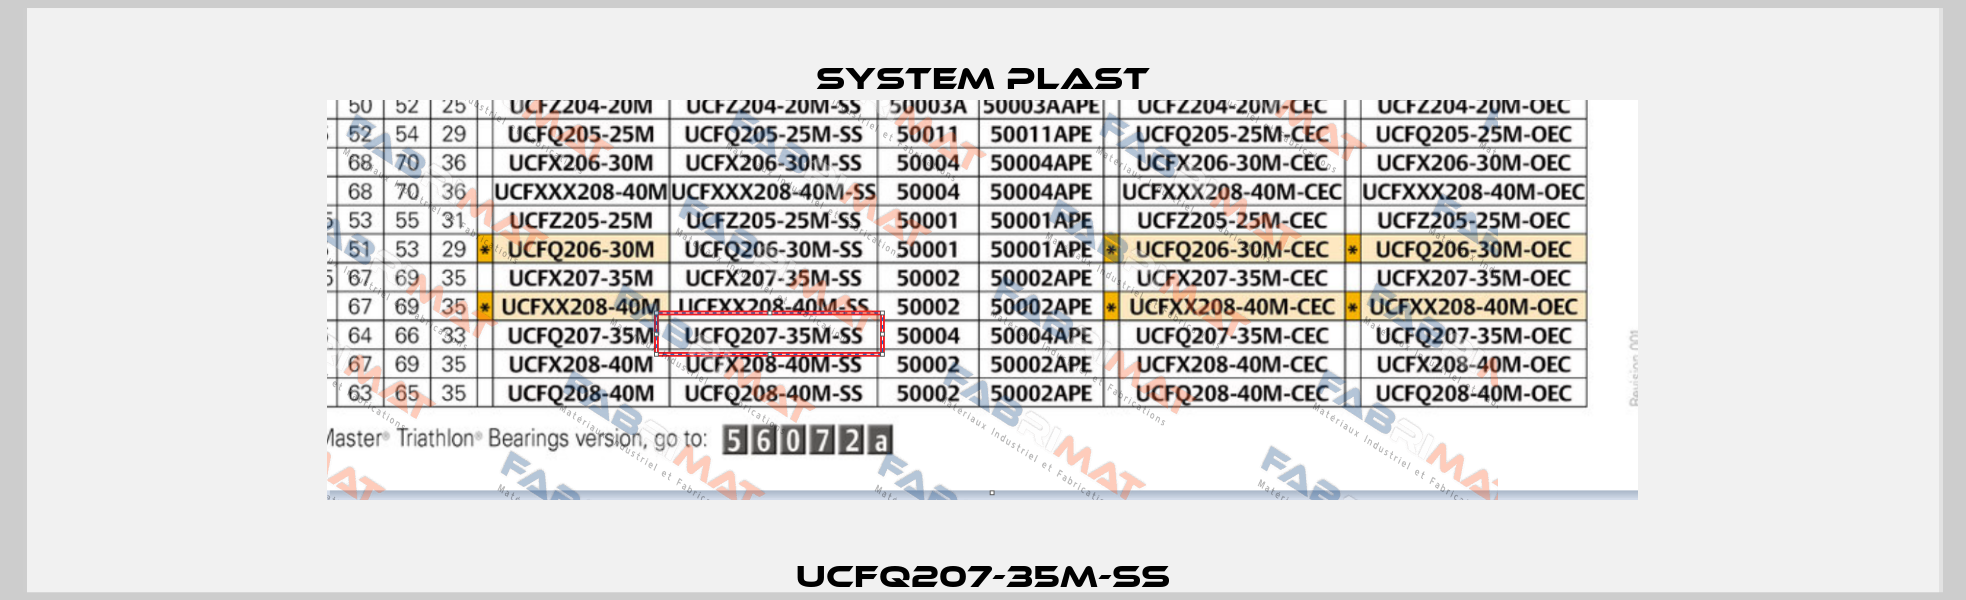 UCFQ207-35M-SS System Plast